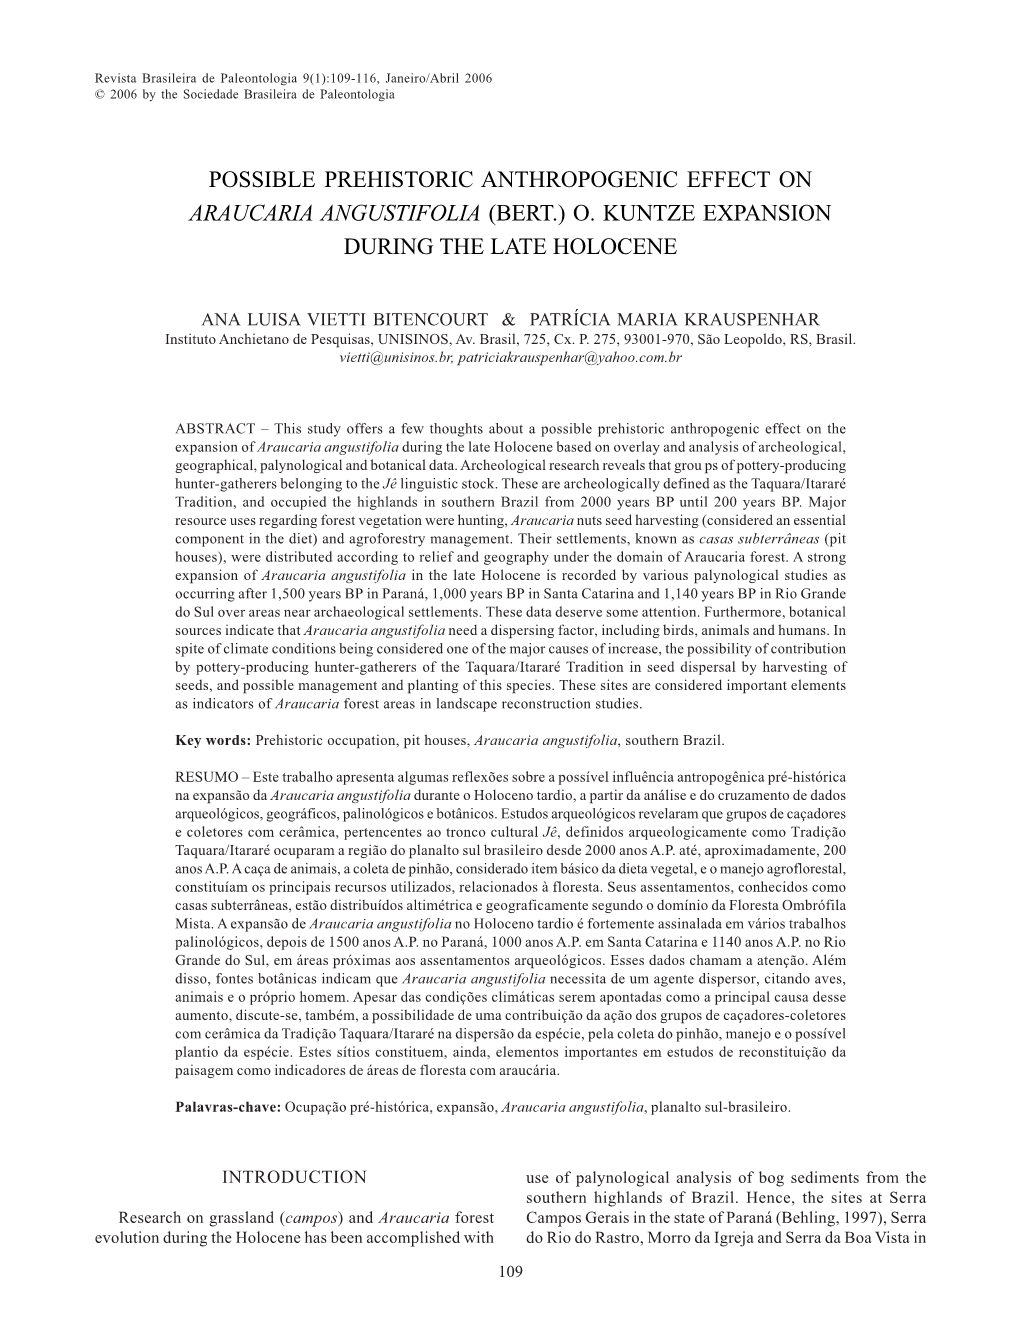 Possible Prehistoric Anthropogenic Effect on Araucaria Angustifolia (Bert.) O